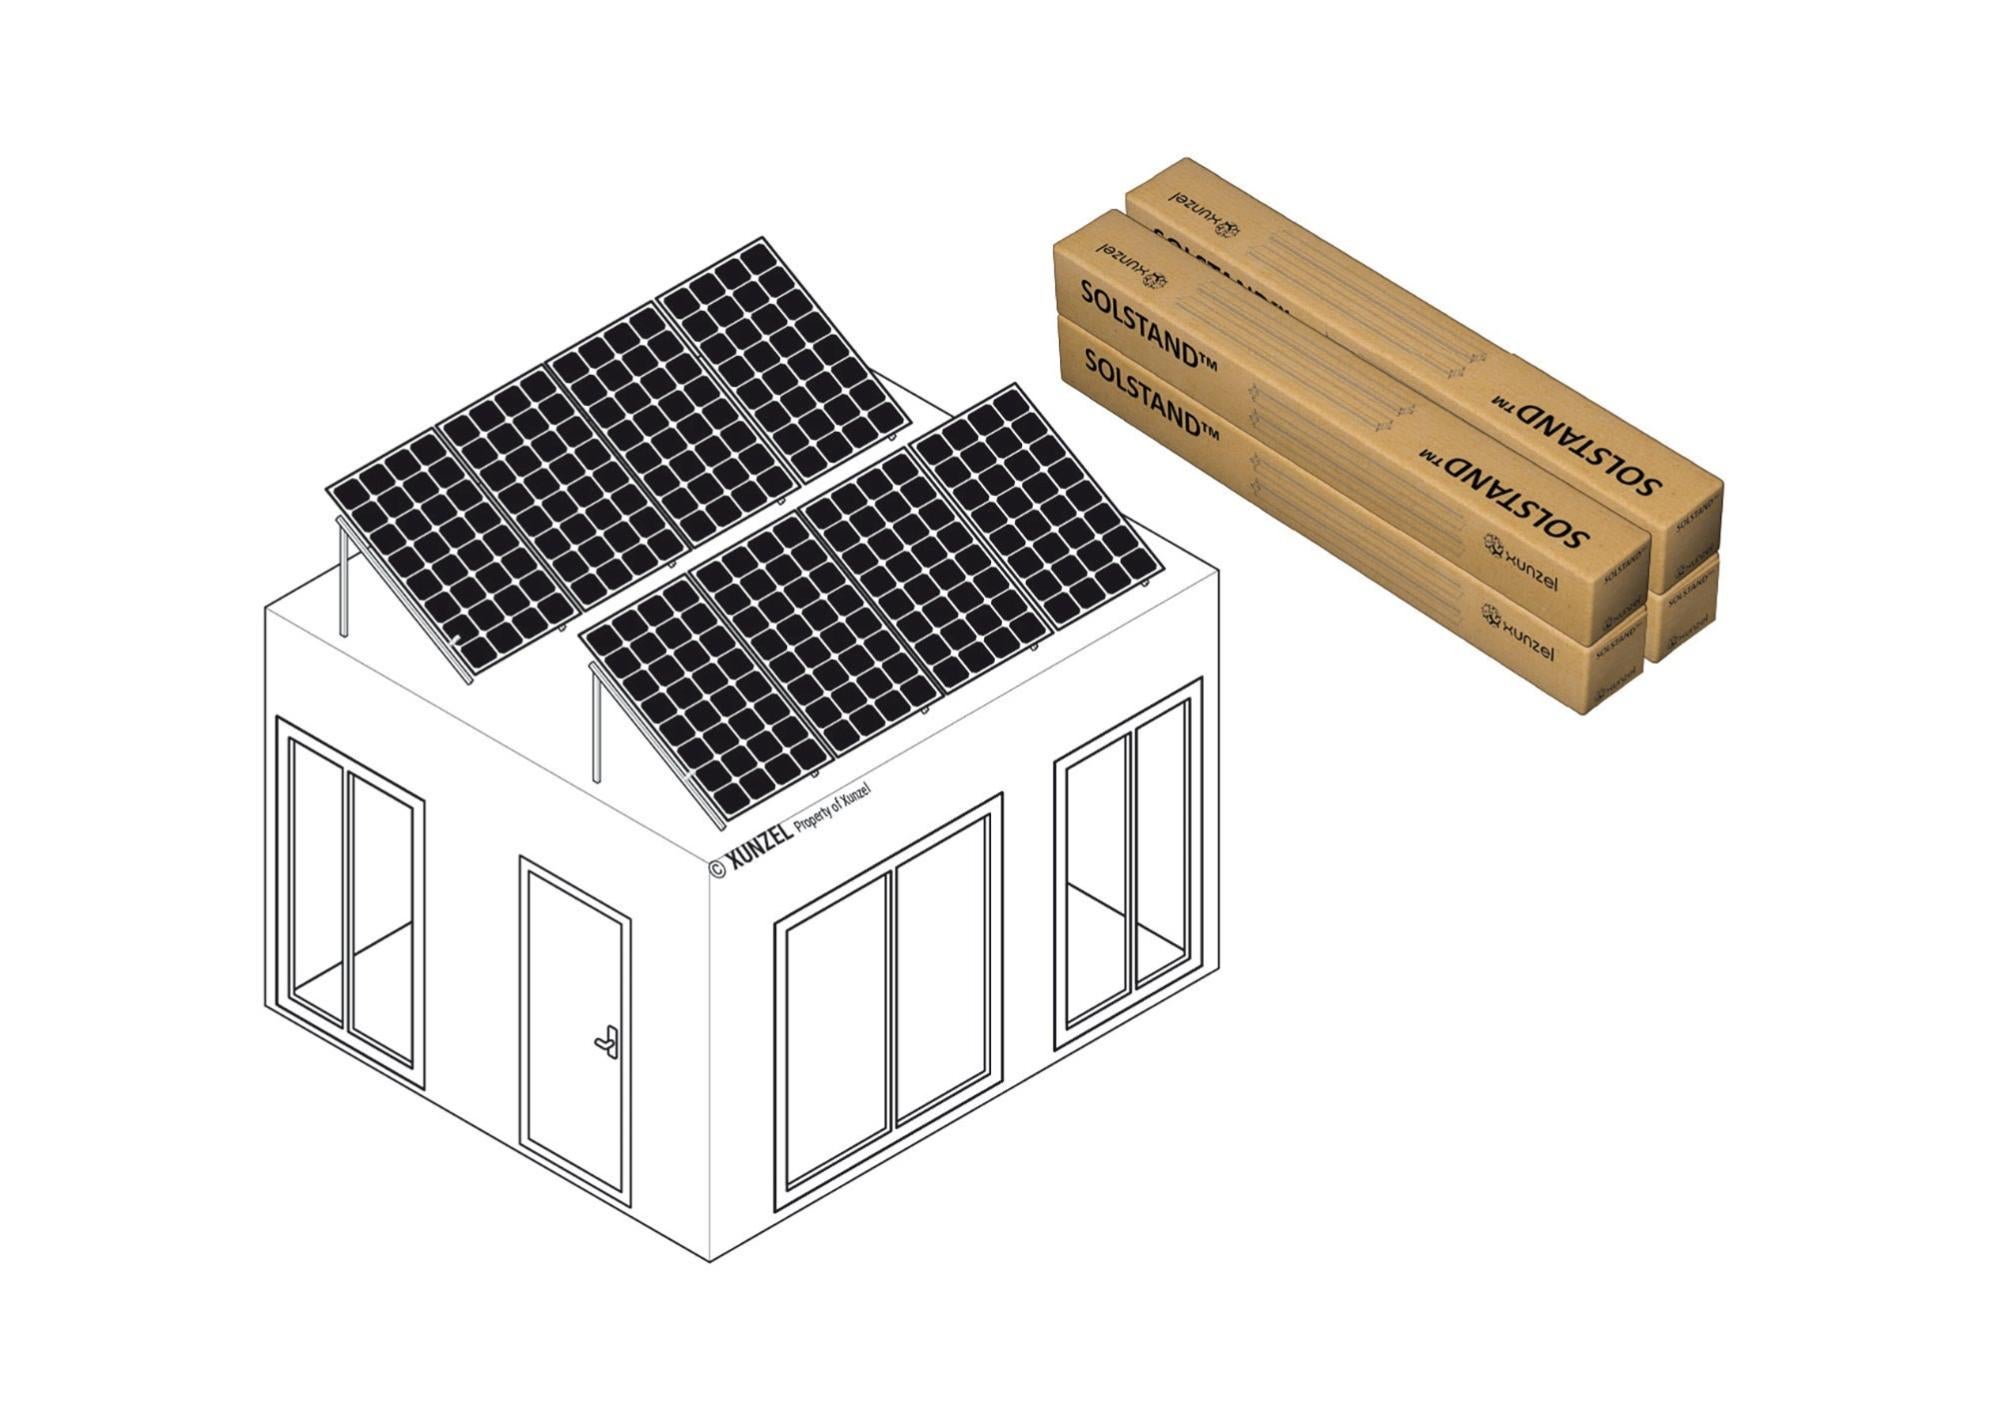 Soporte suelo/cubierta plana solstand-8g-xxl para 8 paneles solarpower-425w